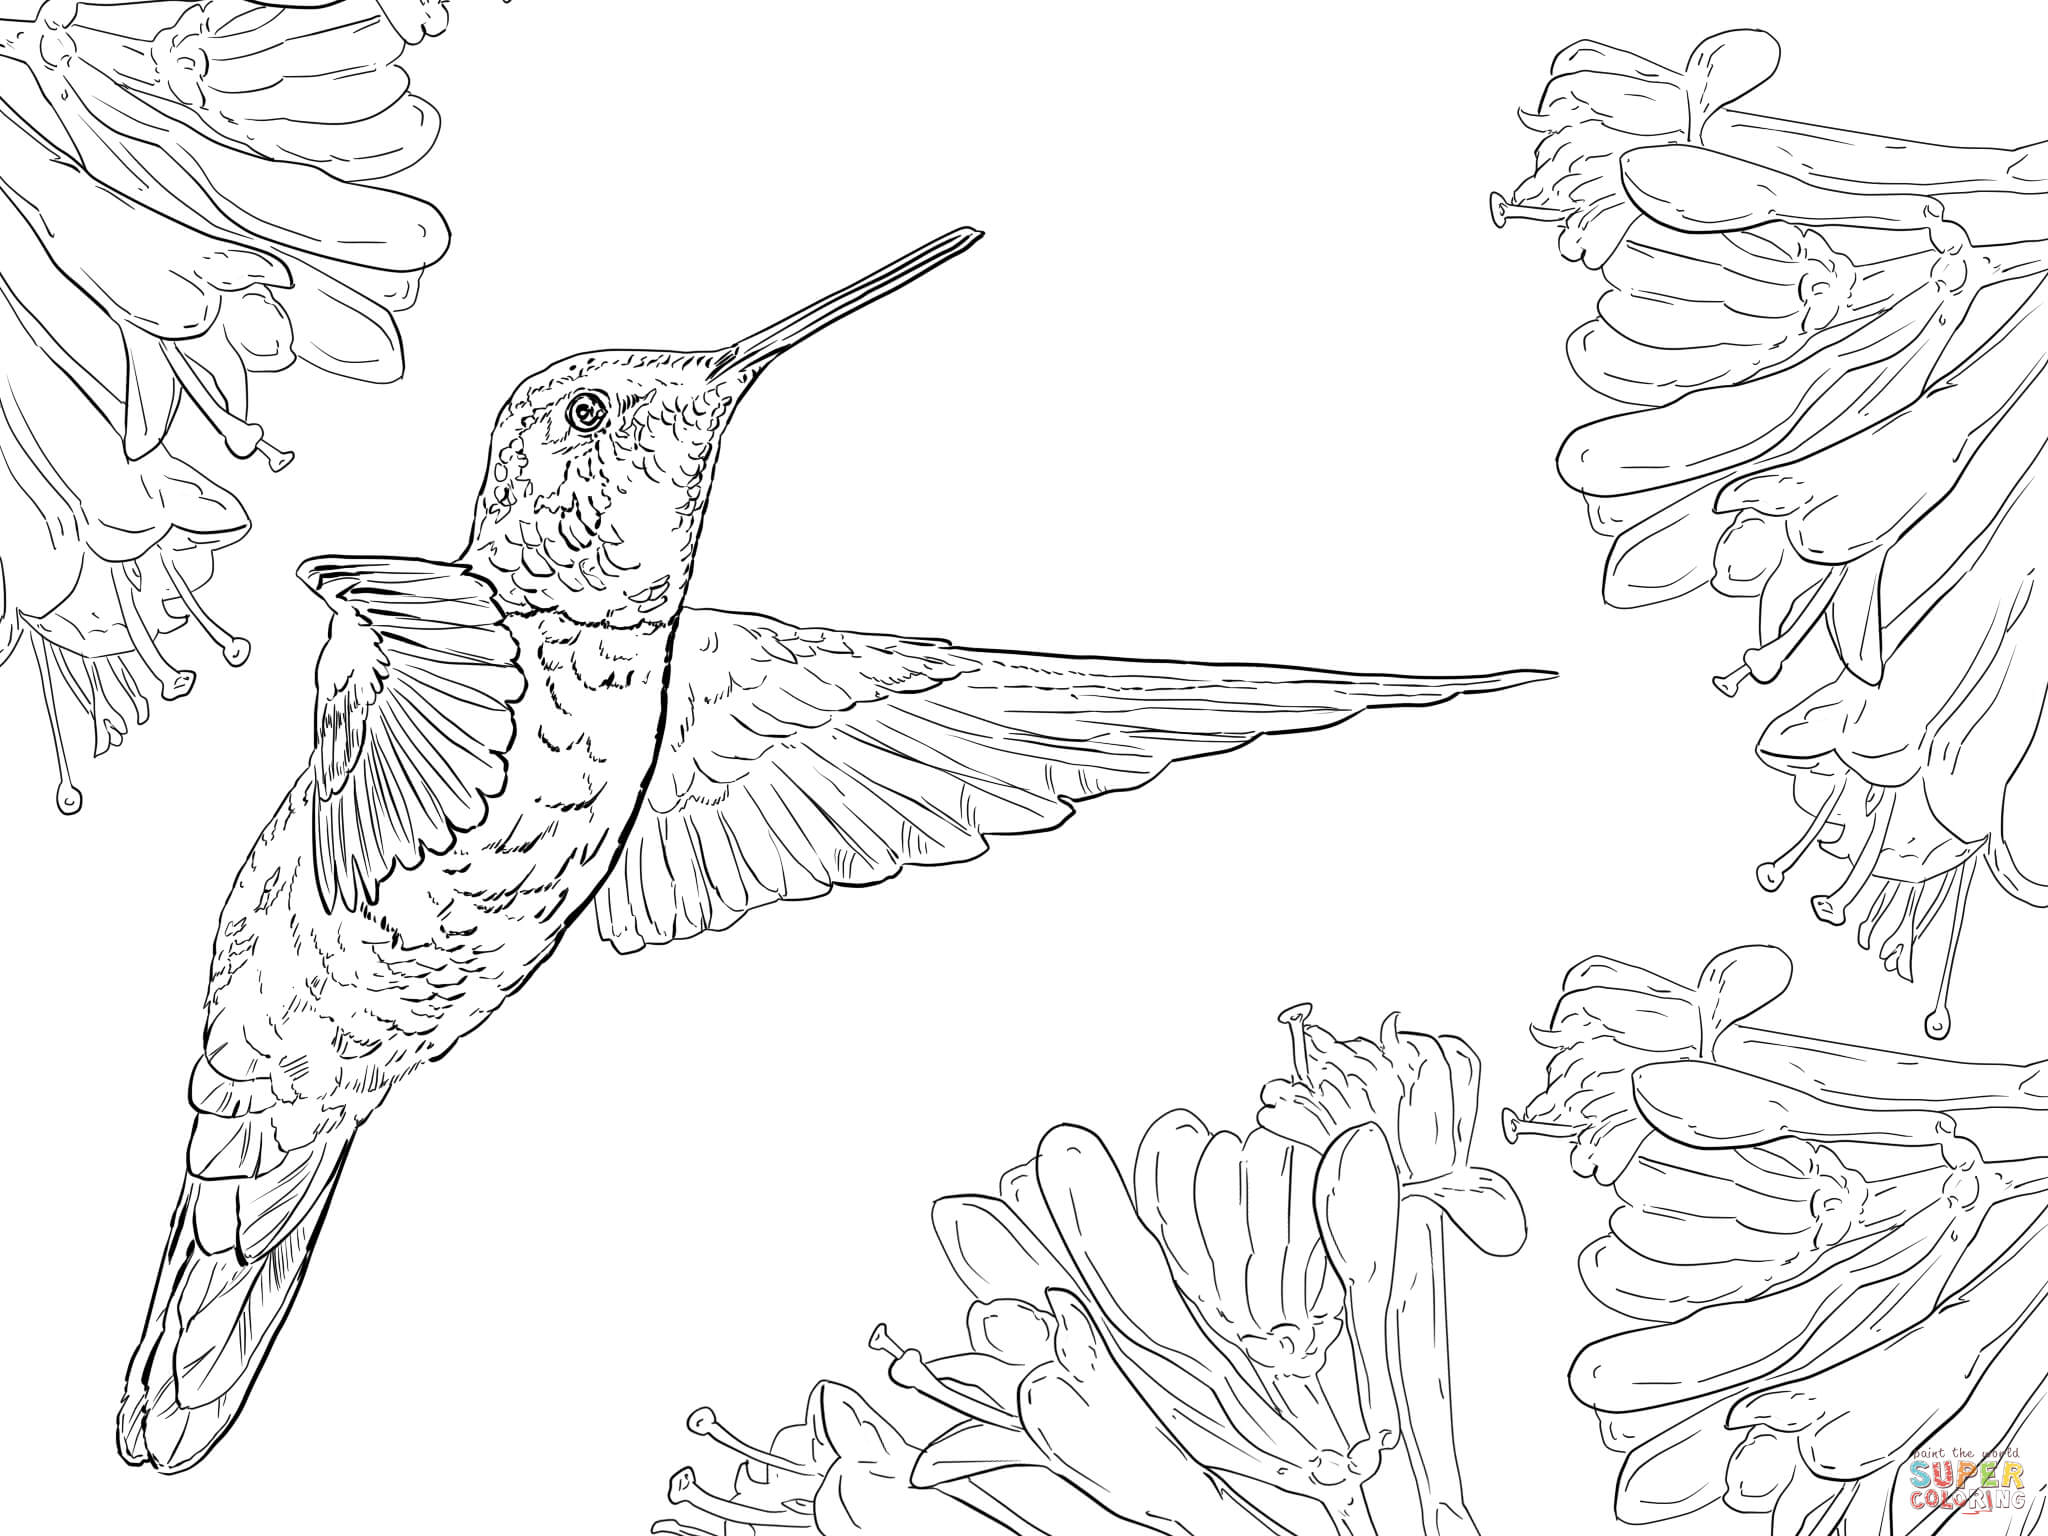 Hummingbird coloring, Download Hummingbird coloring for free 2019